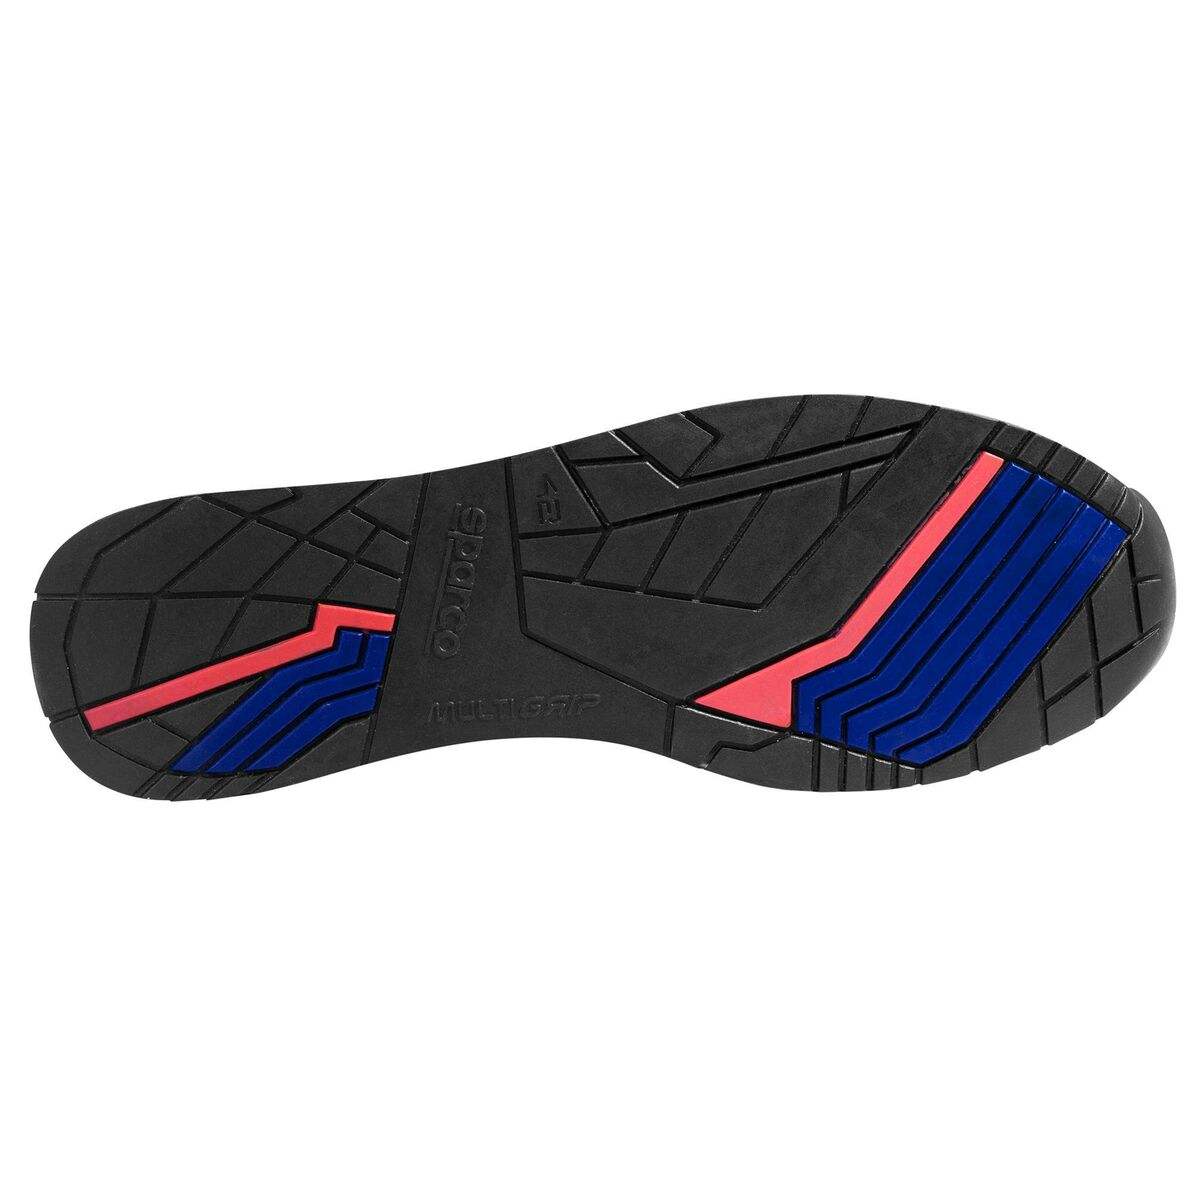 Sicherheits-Schuhe Sparco Gymkhana Red Bull S3 Rot Marineblau 43